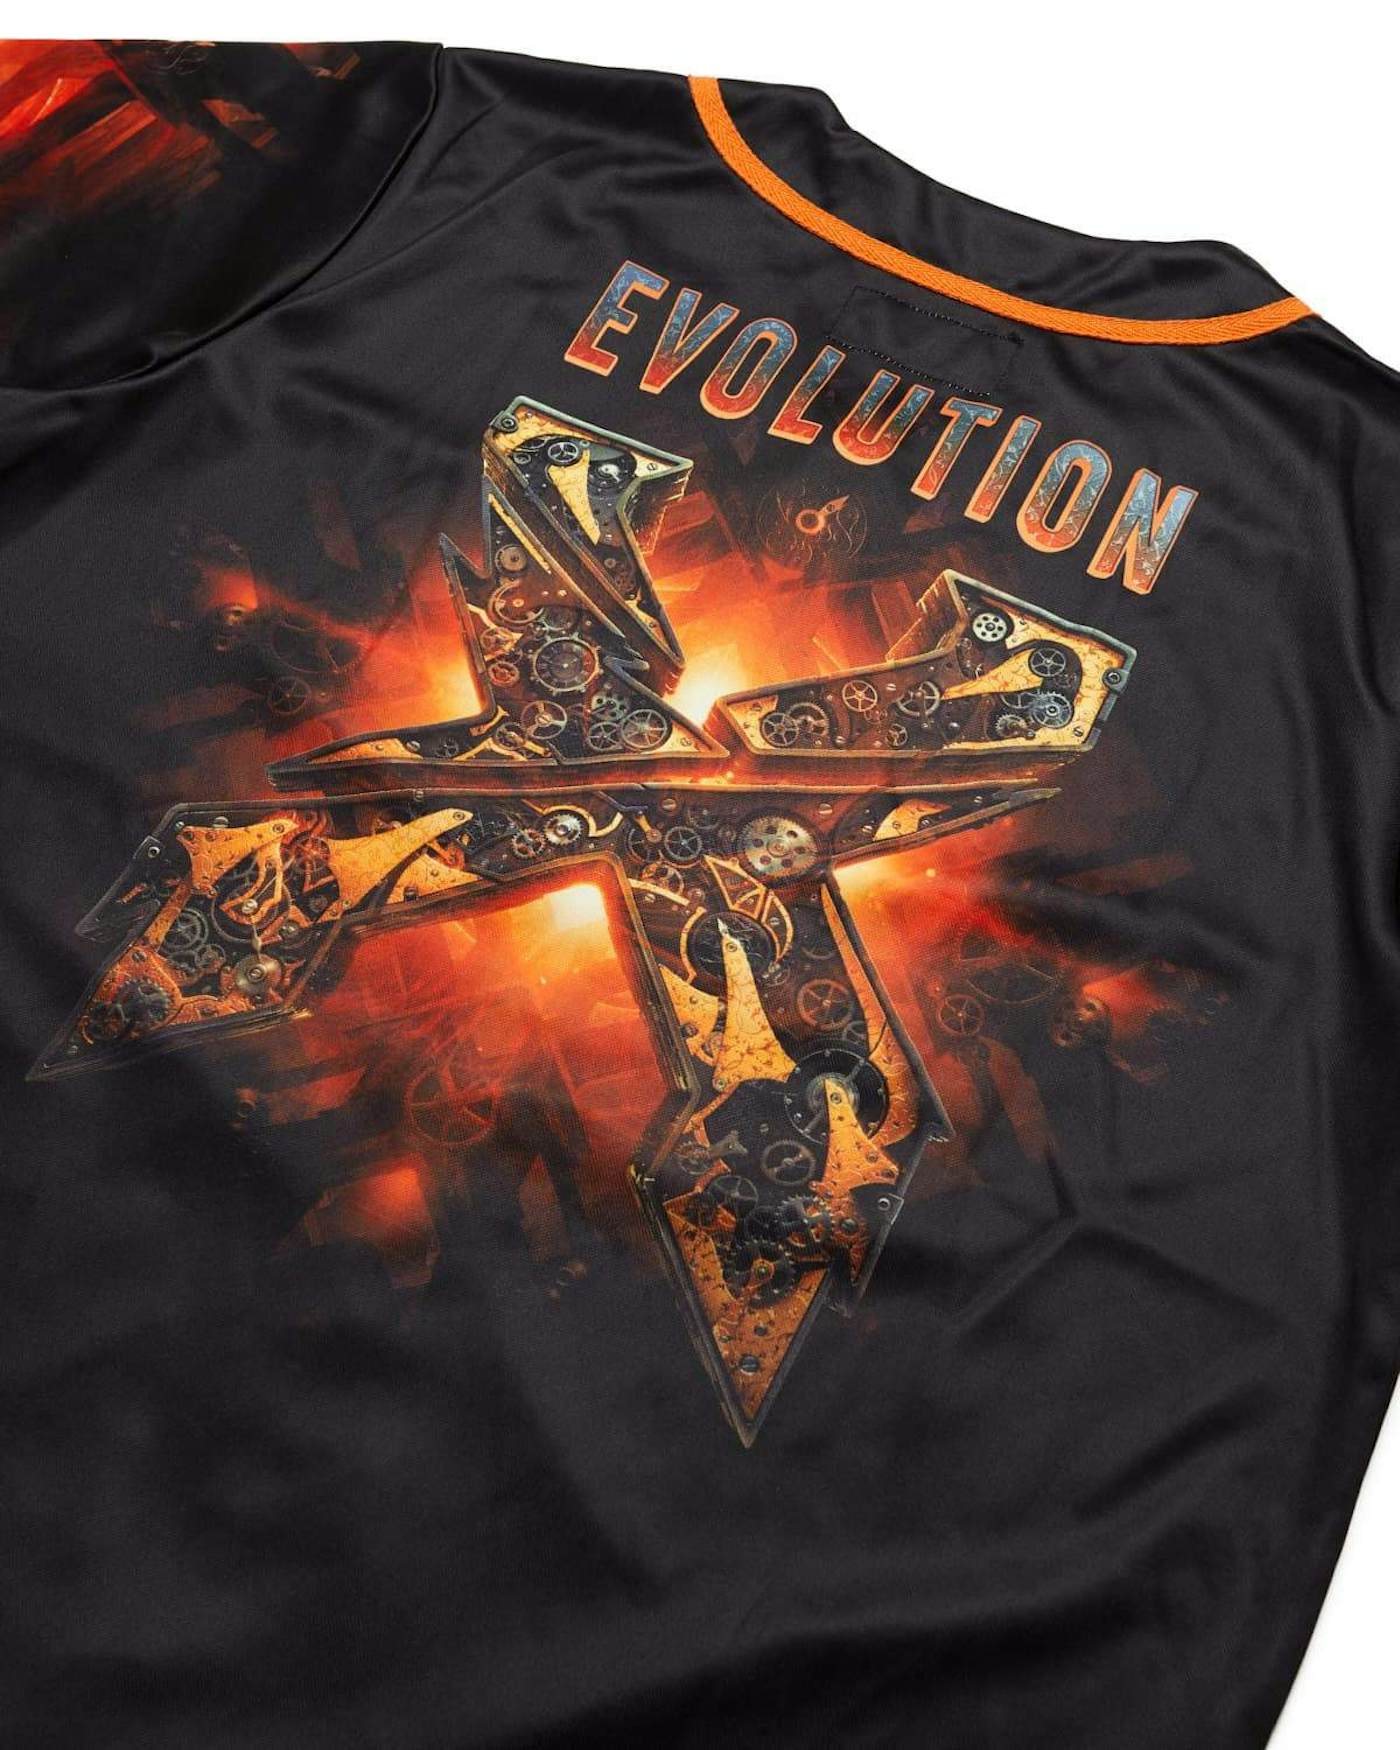 Excision Evolution Tour Baseball Jersey - Black/Orange